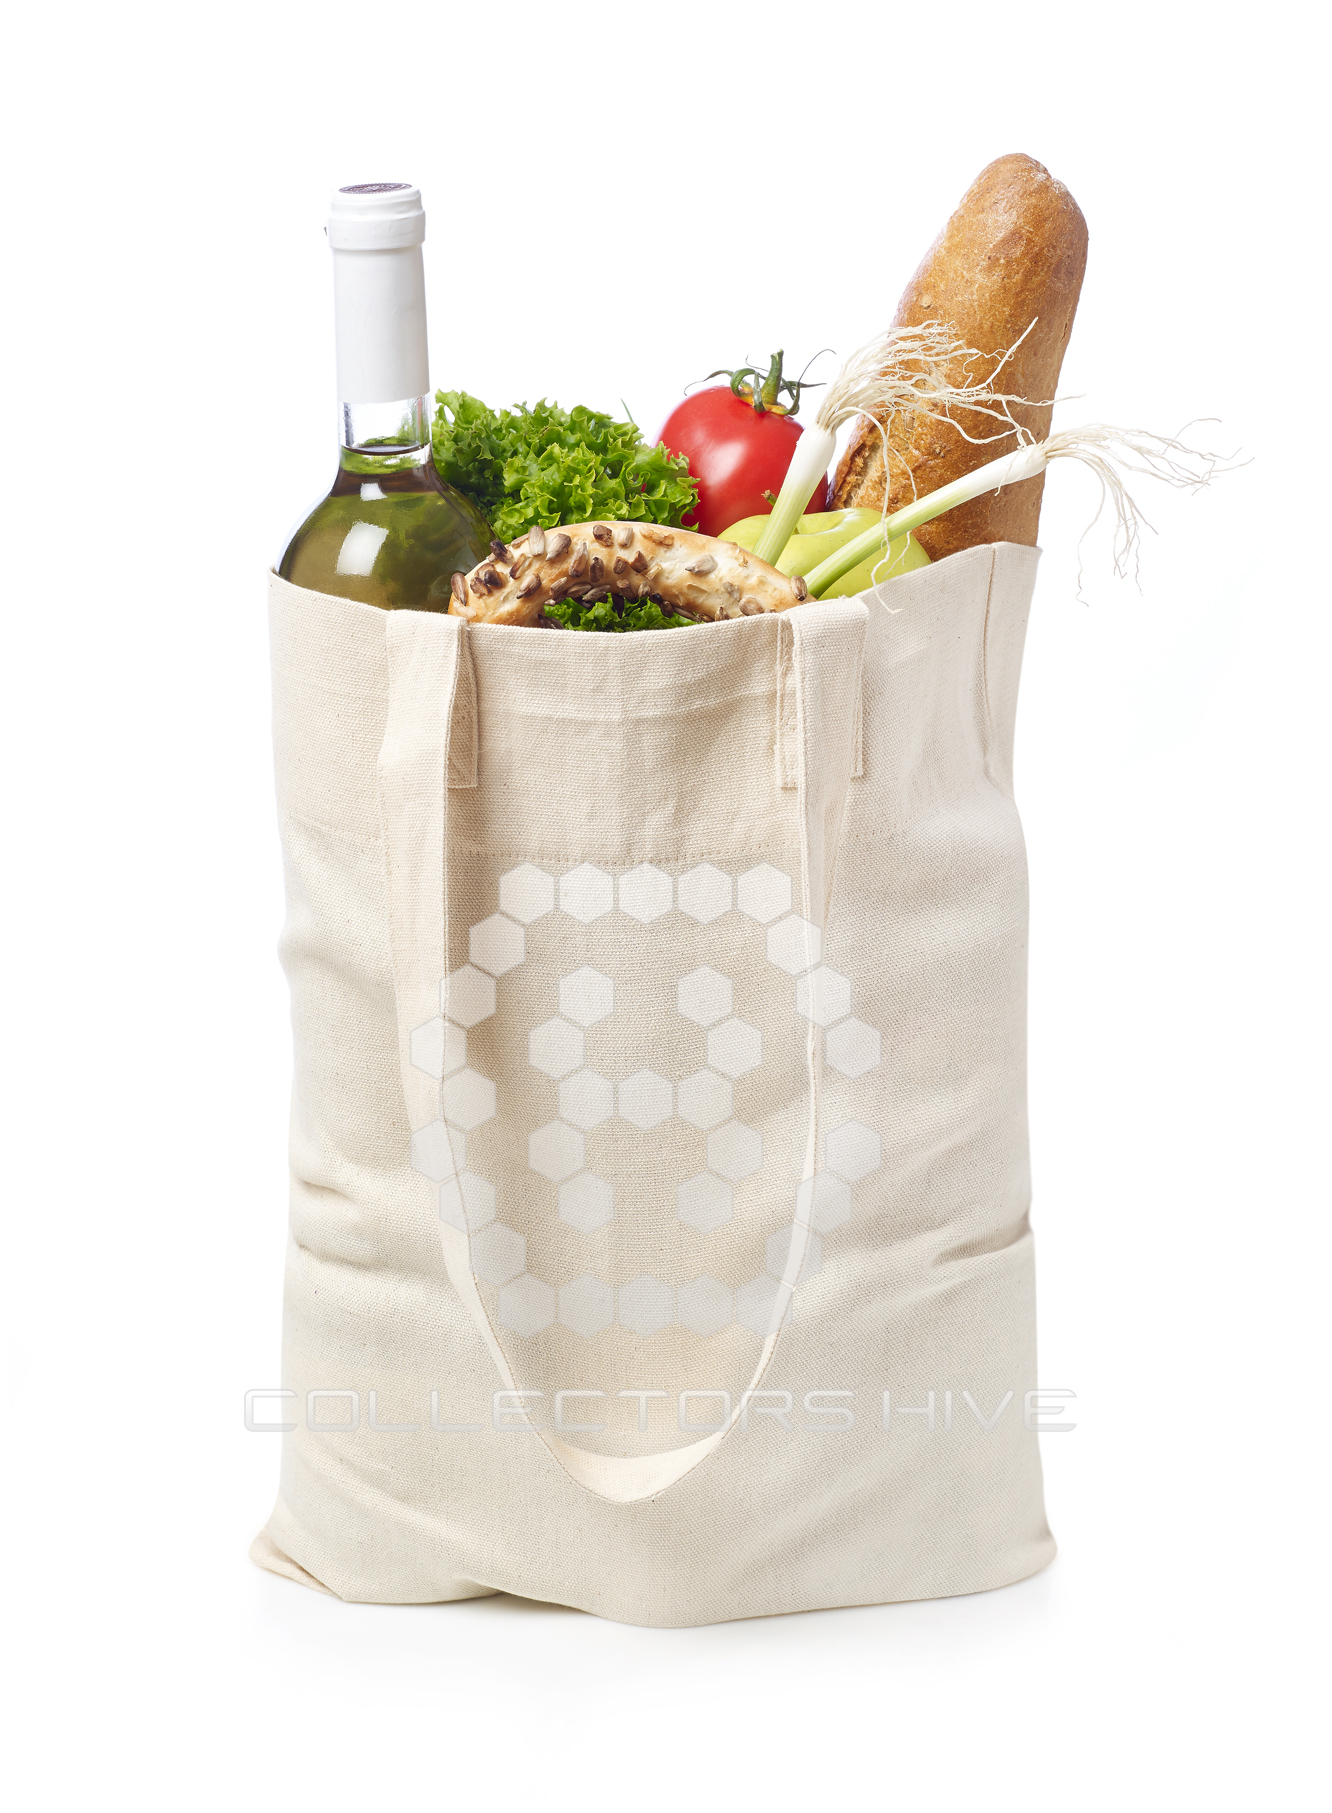 Reusable eco friendly grocery bag